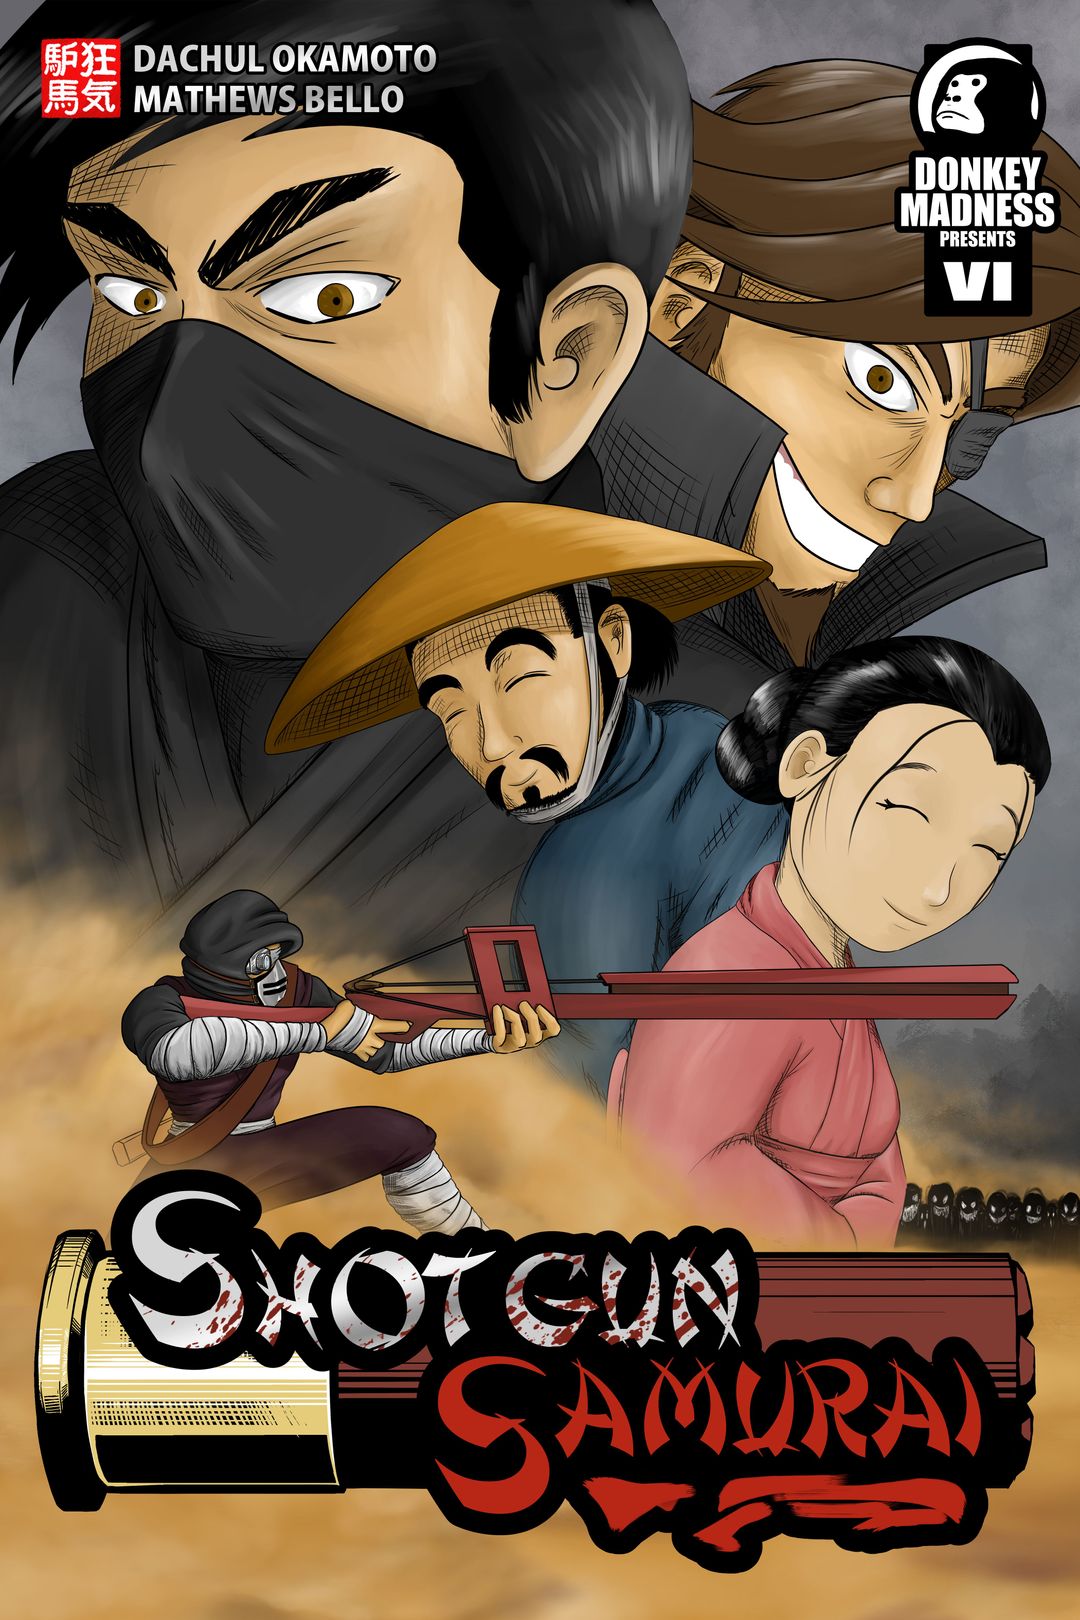 Shotgun Samurai 23 panel 1